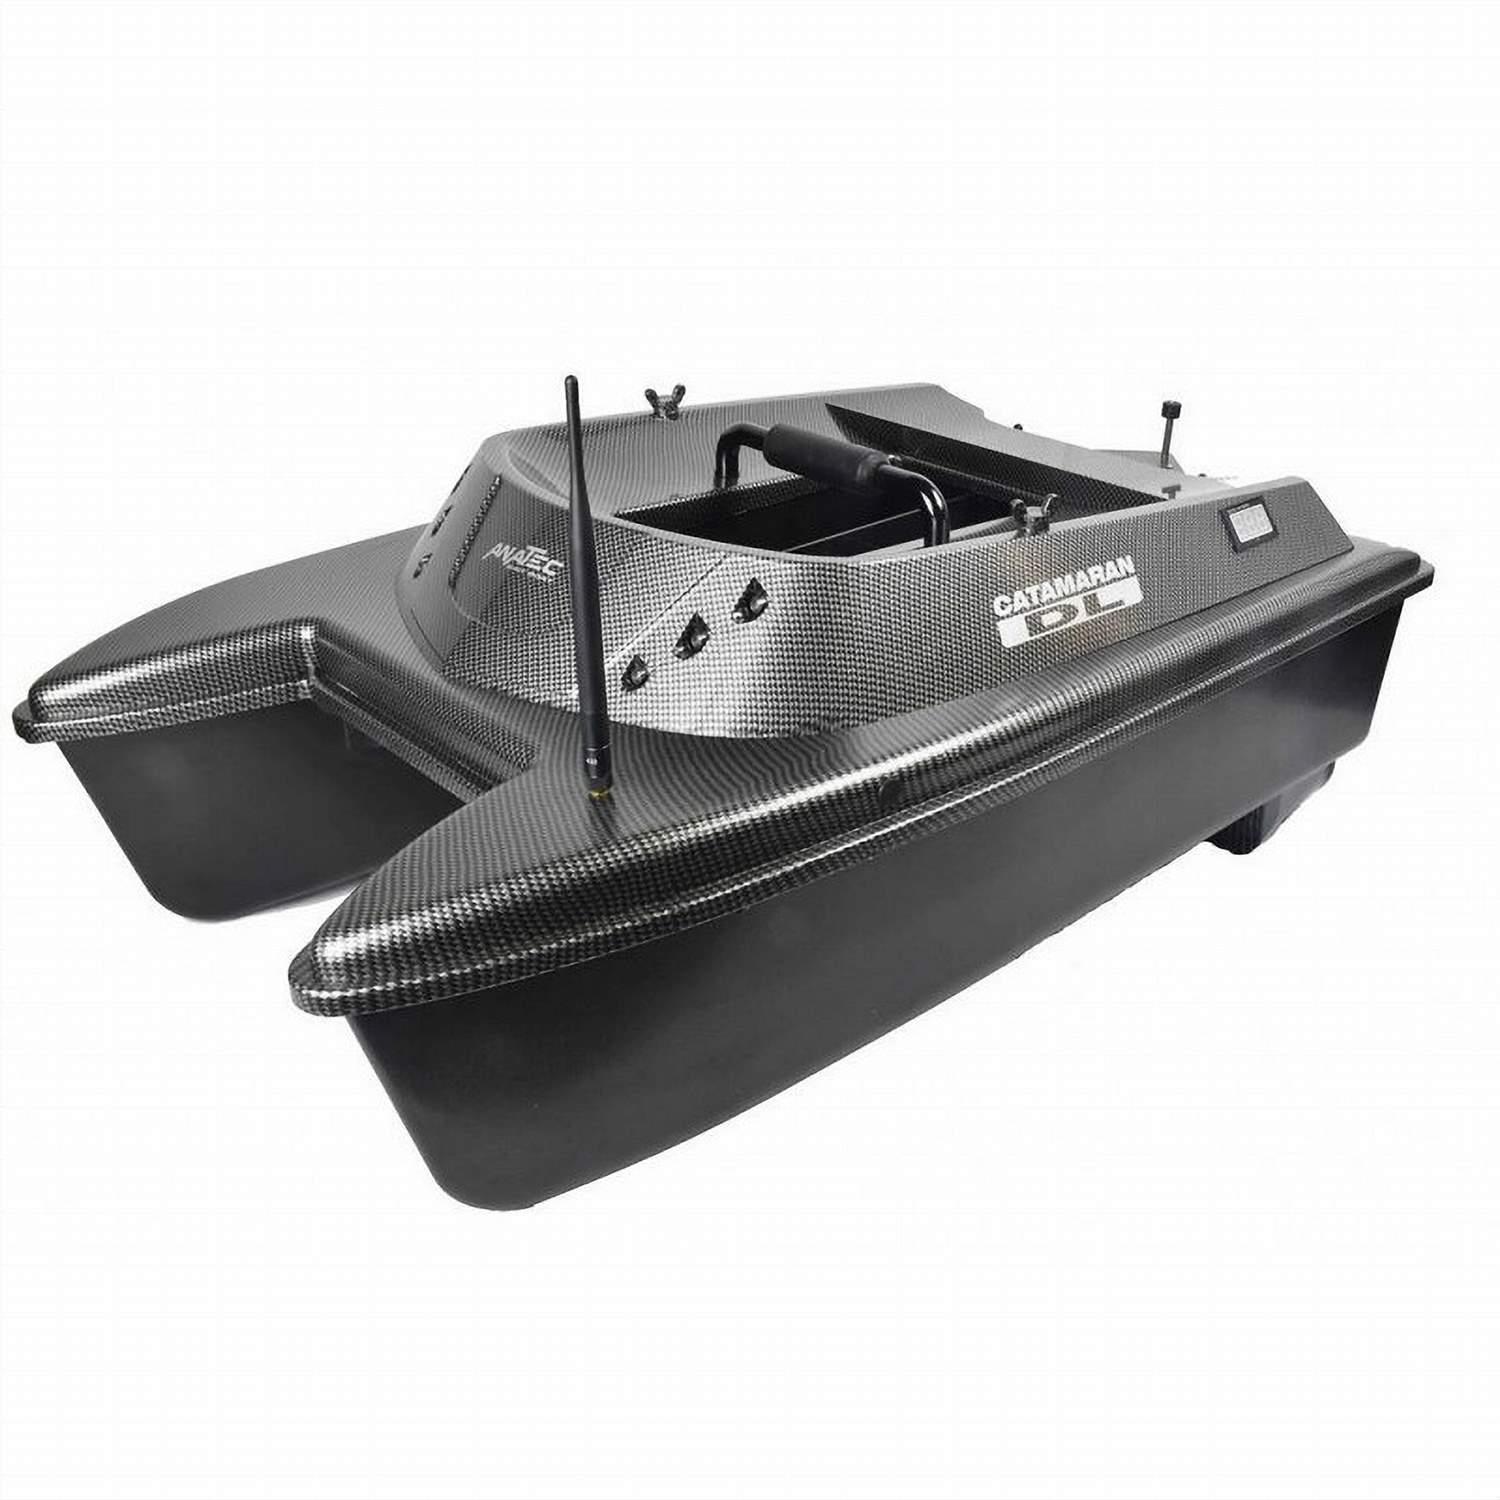 Anatec Catamaran CRB Smart Control Bait Boat with Lithium